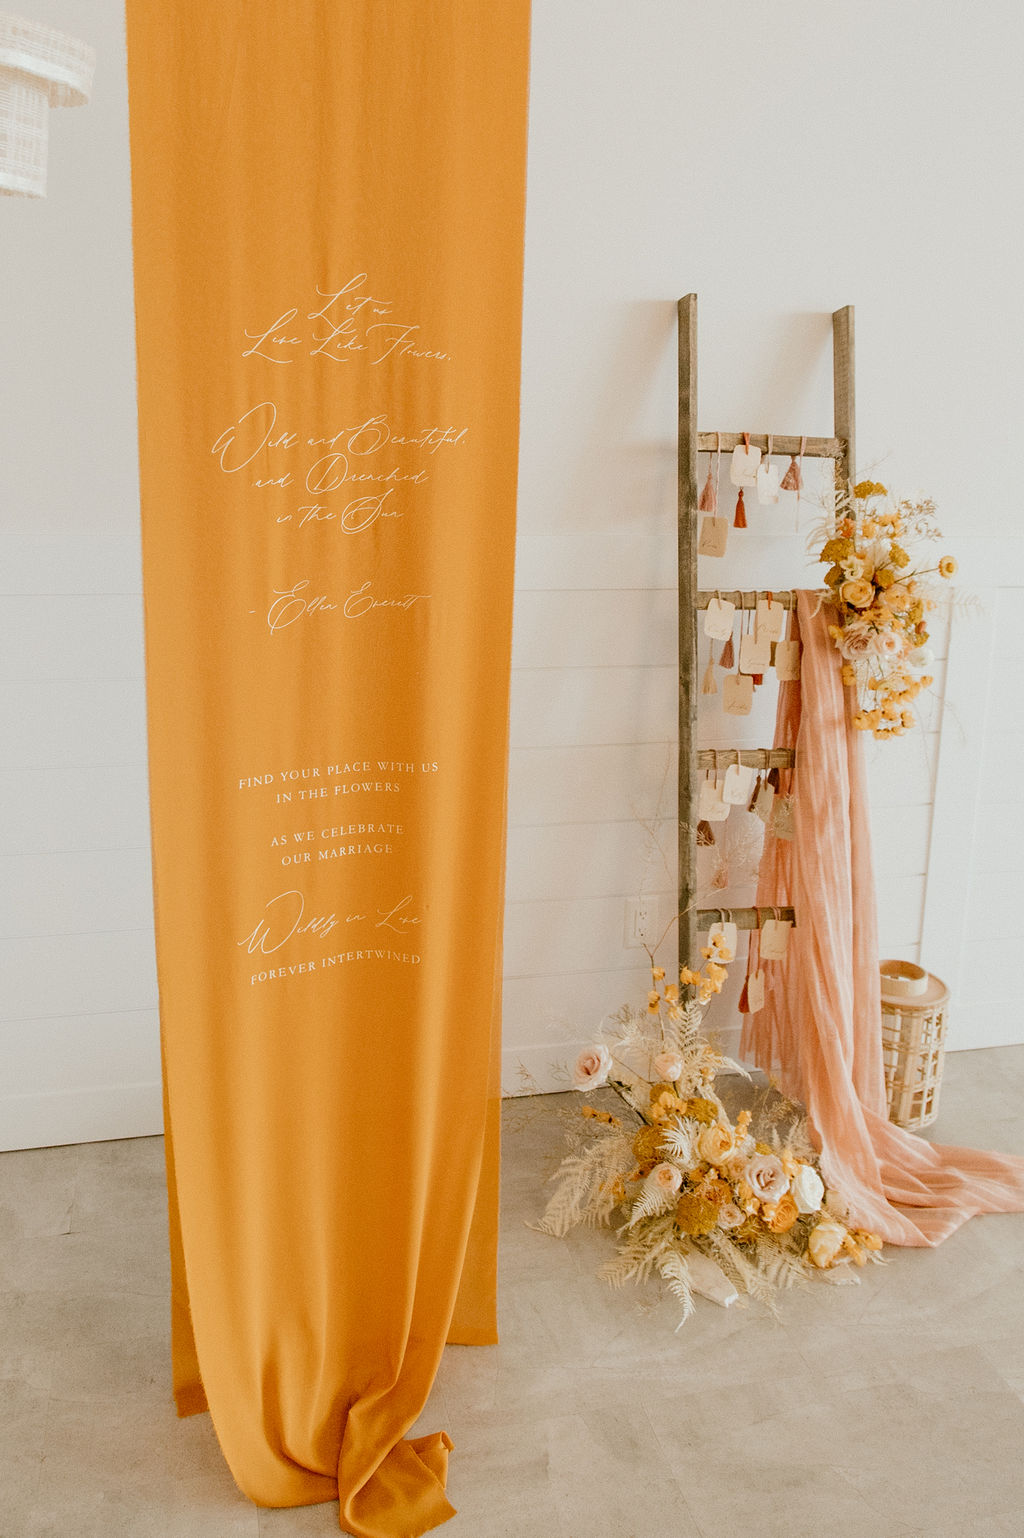 Wedding ceremony tapestry for fall wedding decor inspiration